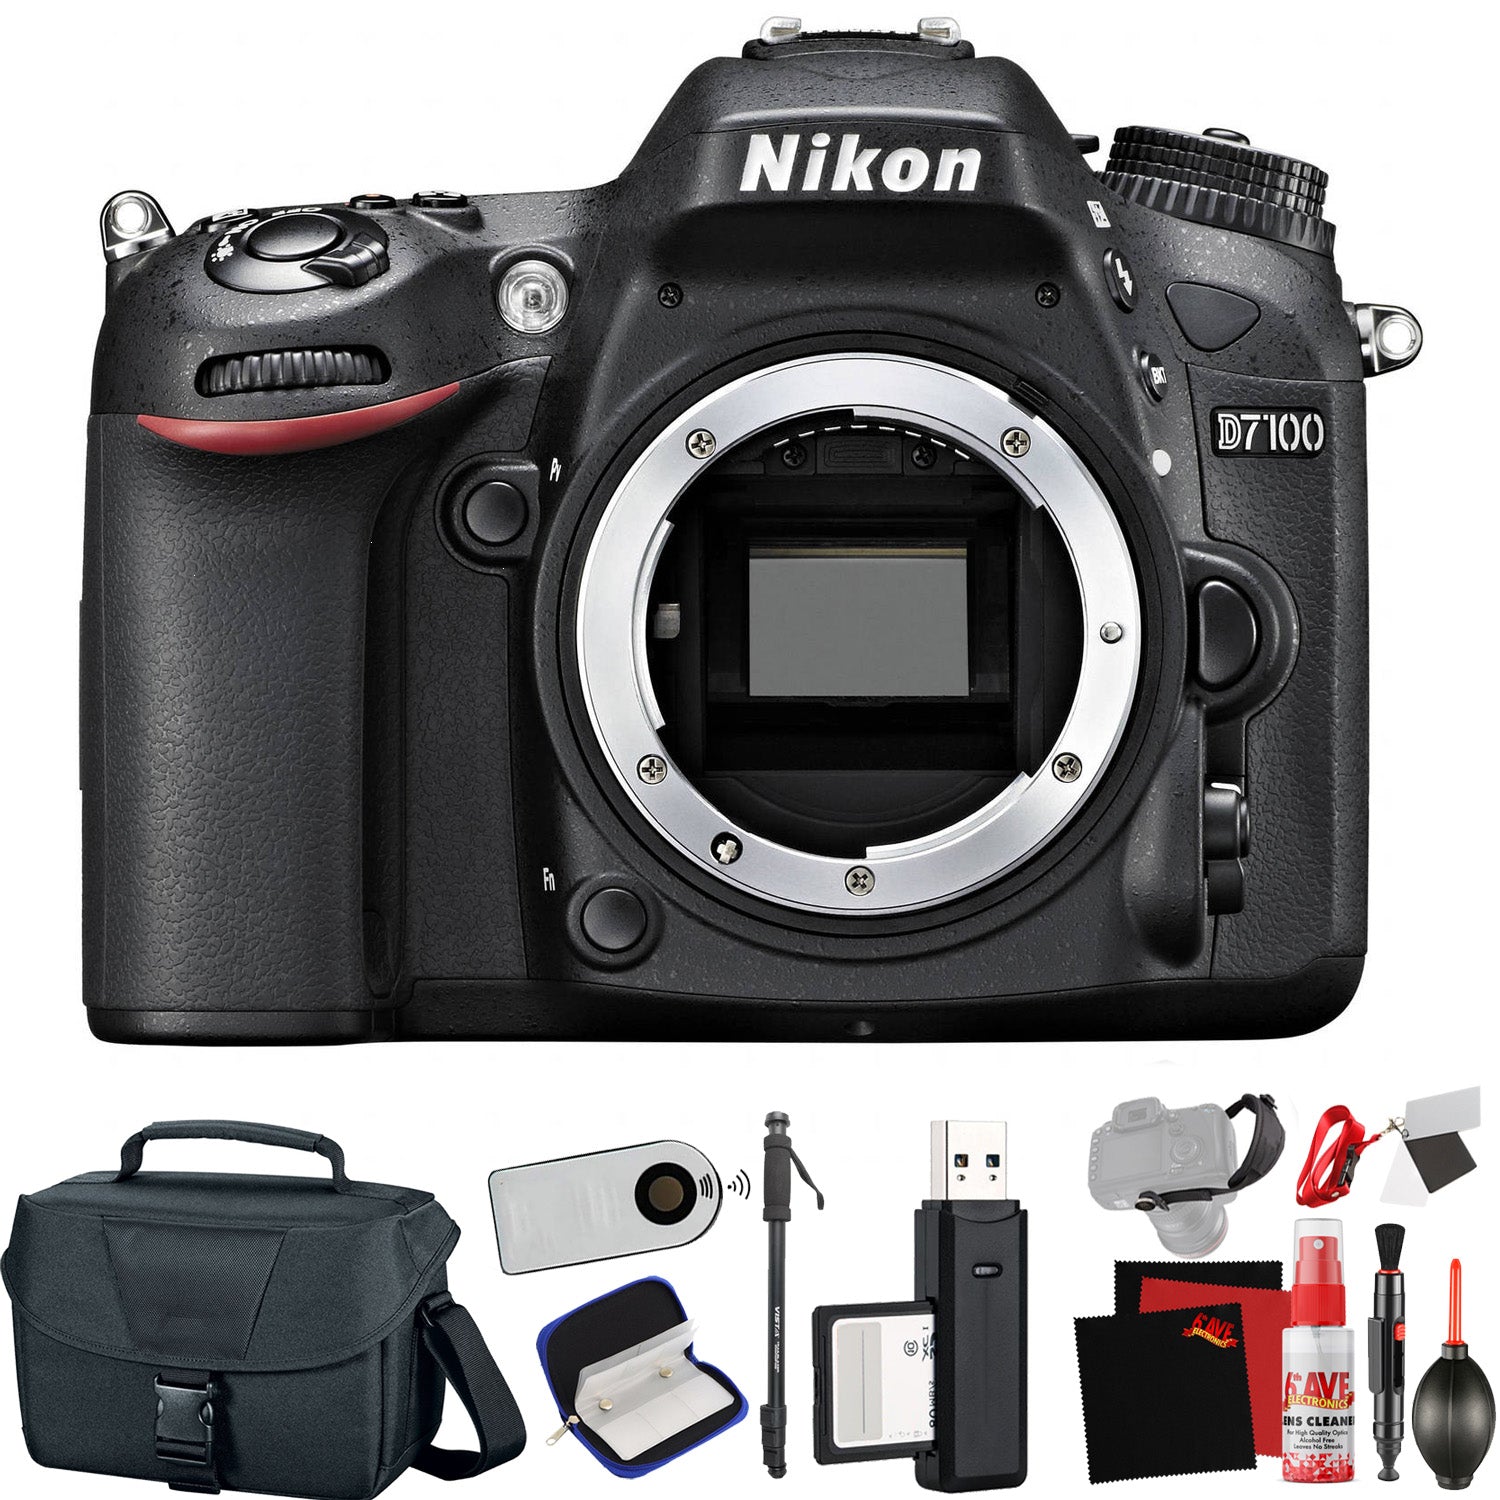 Nikon D7100 DSLR Camera (Body Only) (International Model) with Extra Accessory Bundle